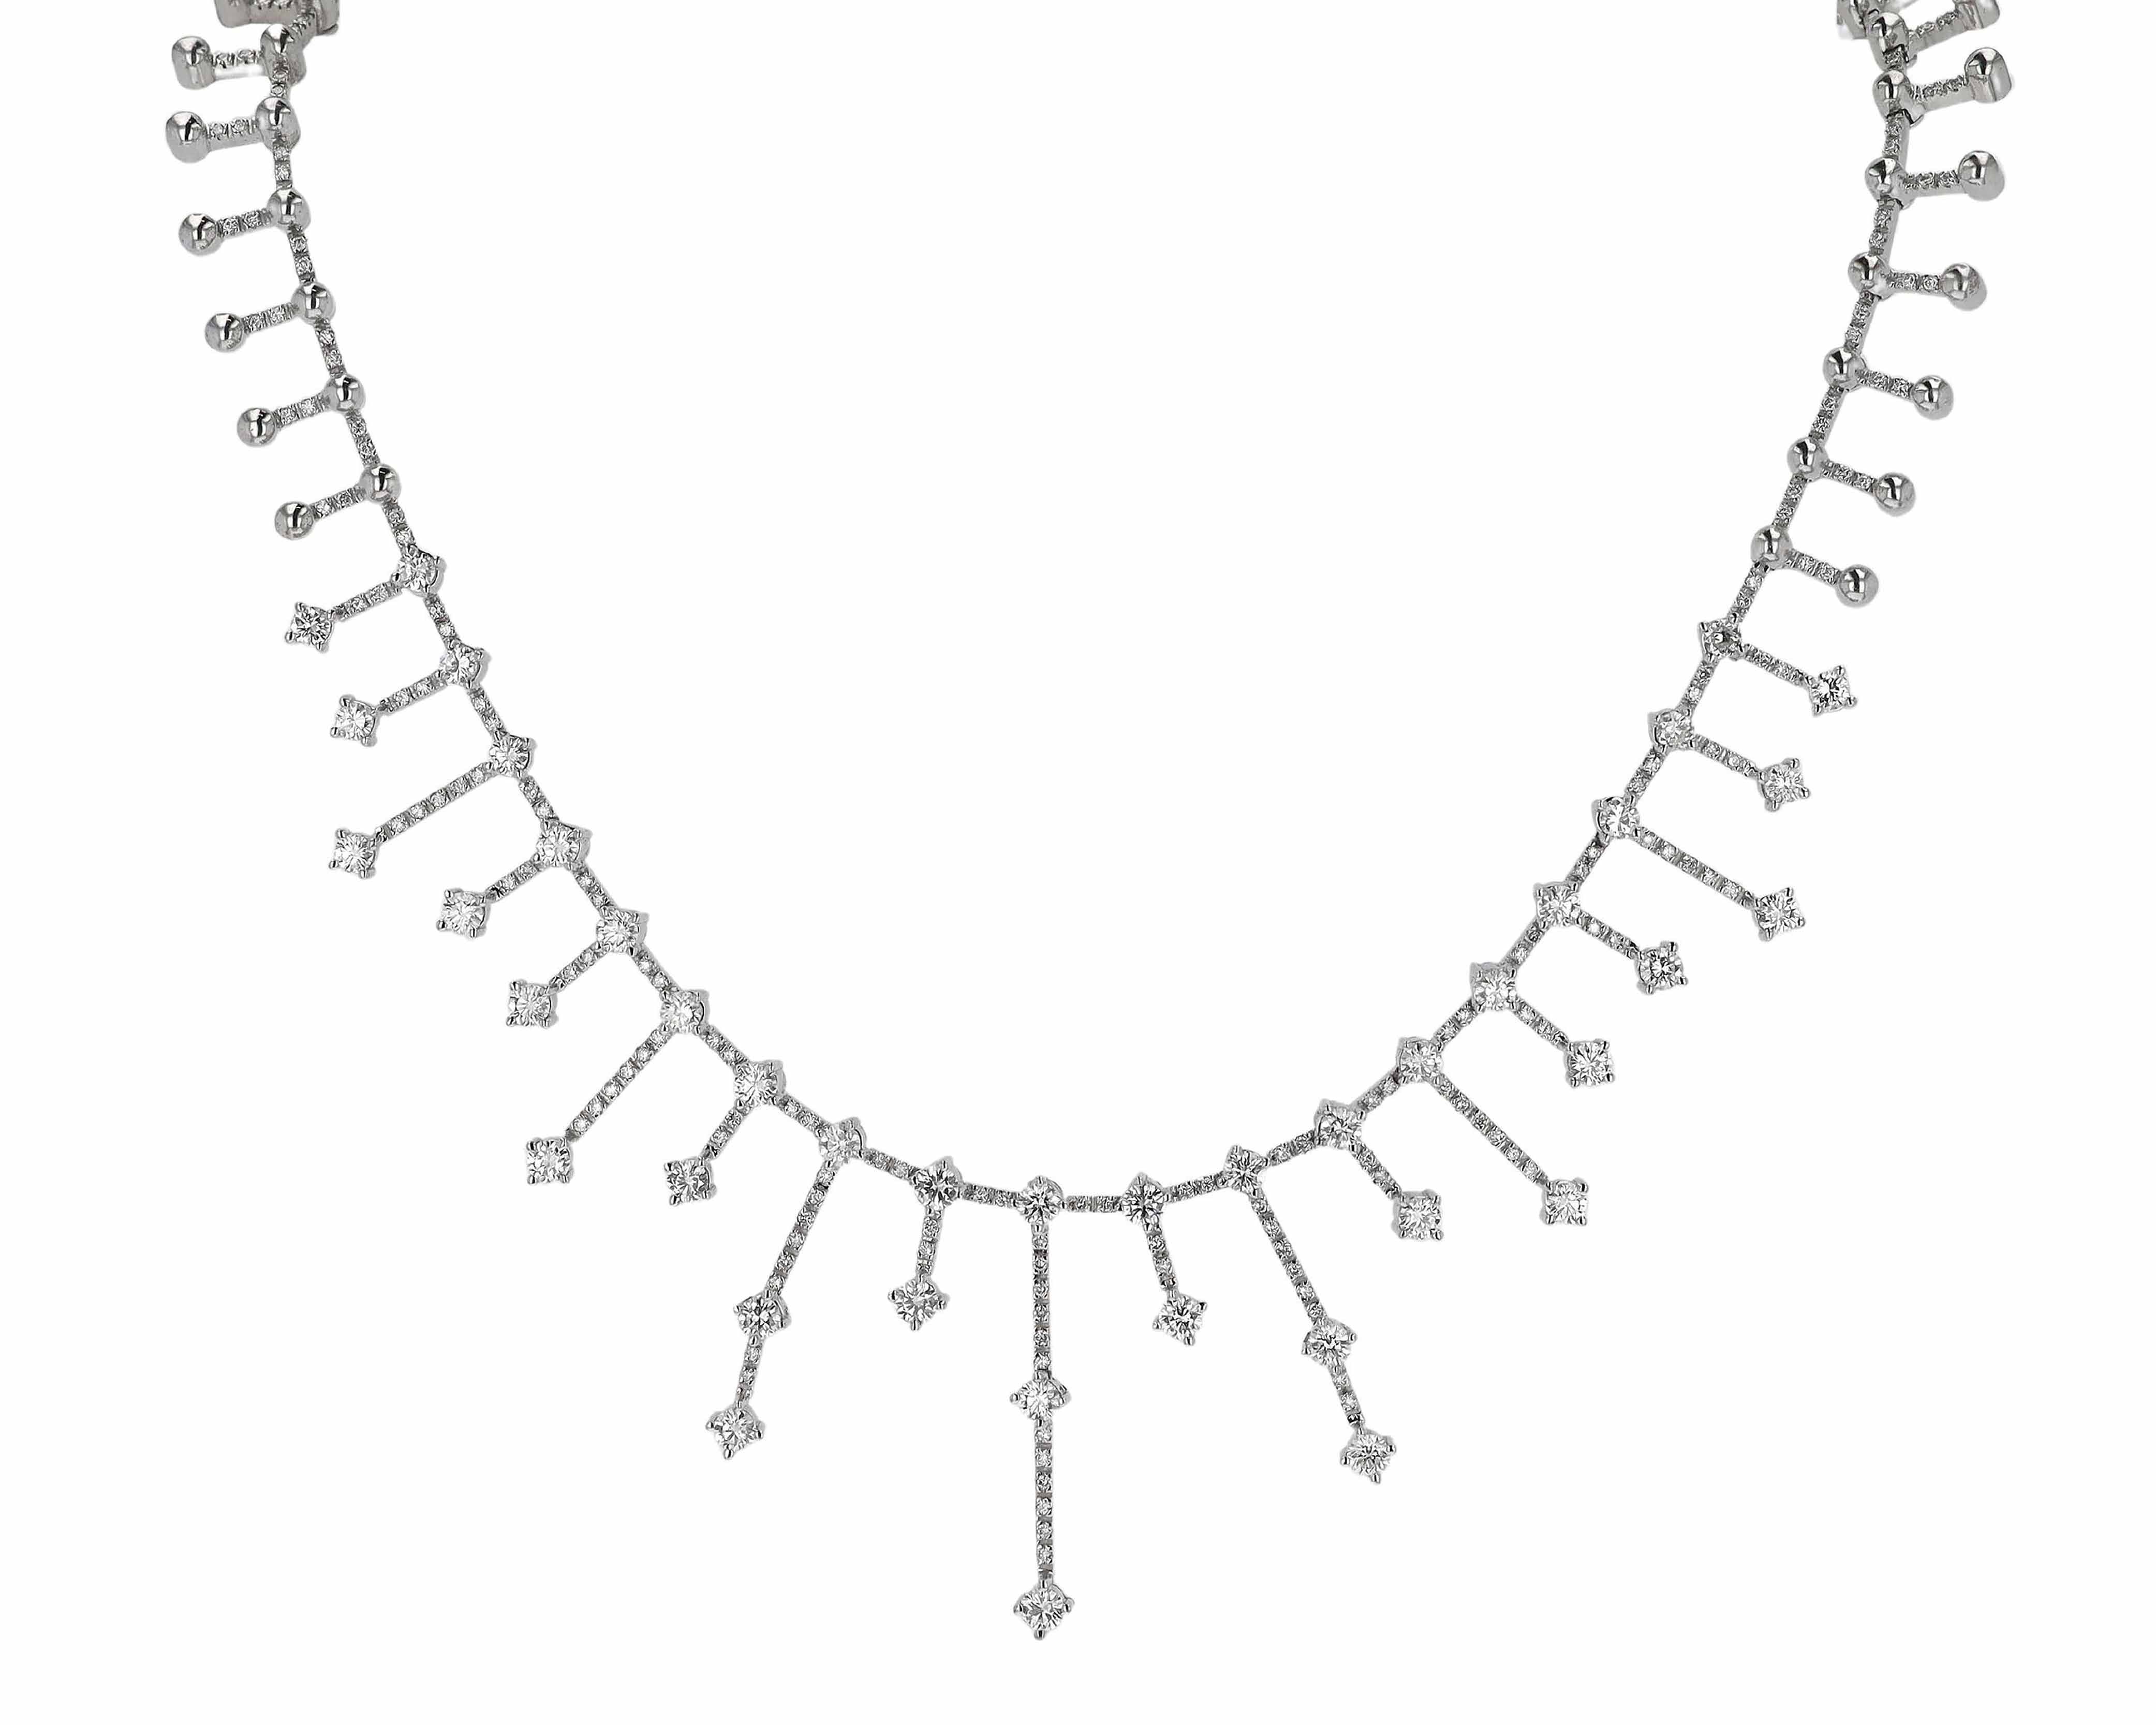 Diamond Choker Necklace